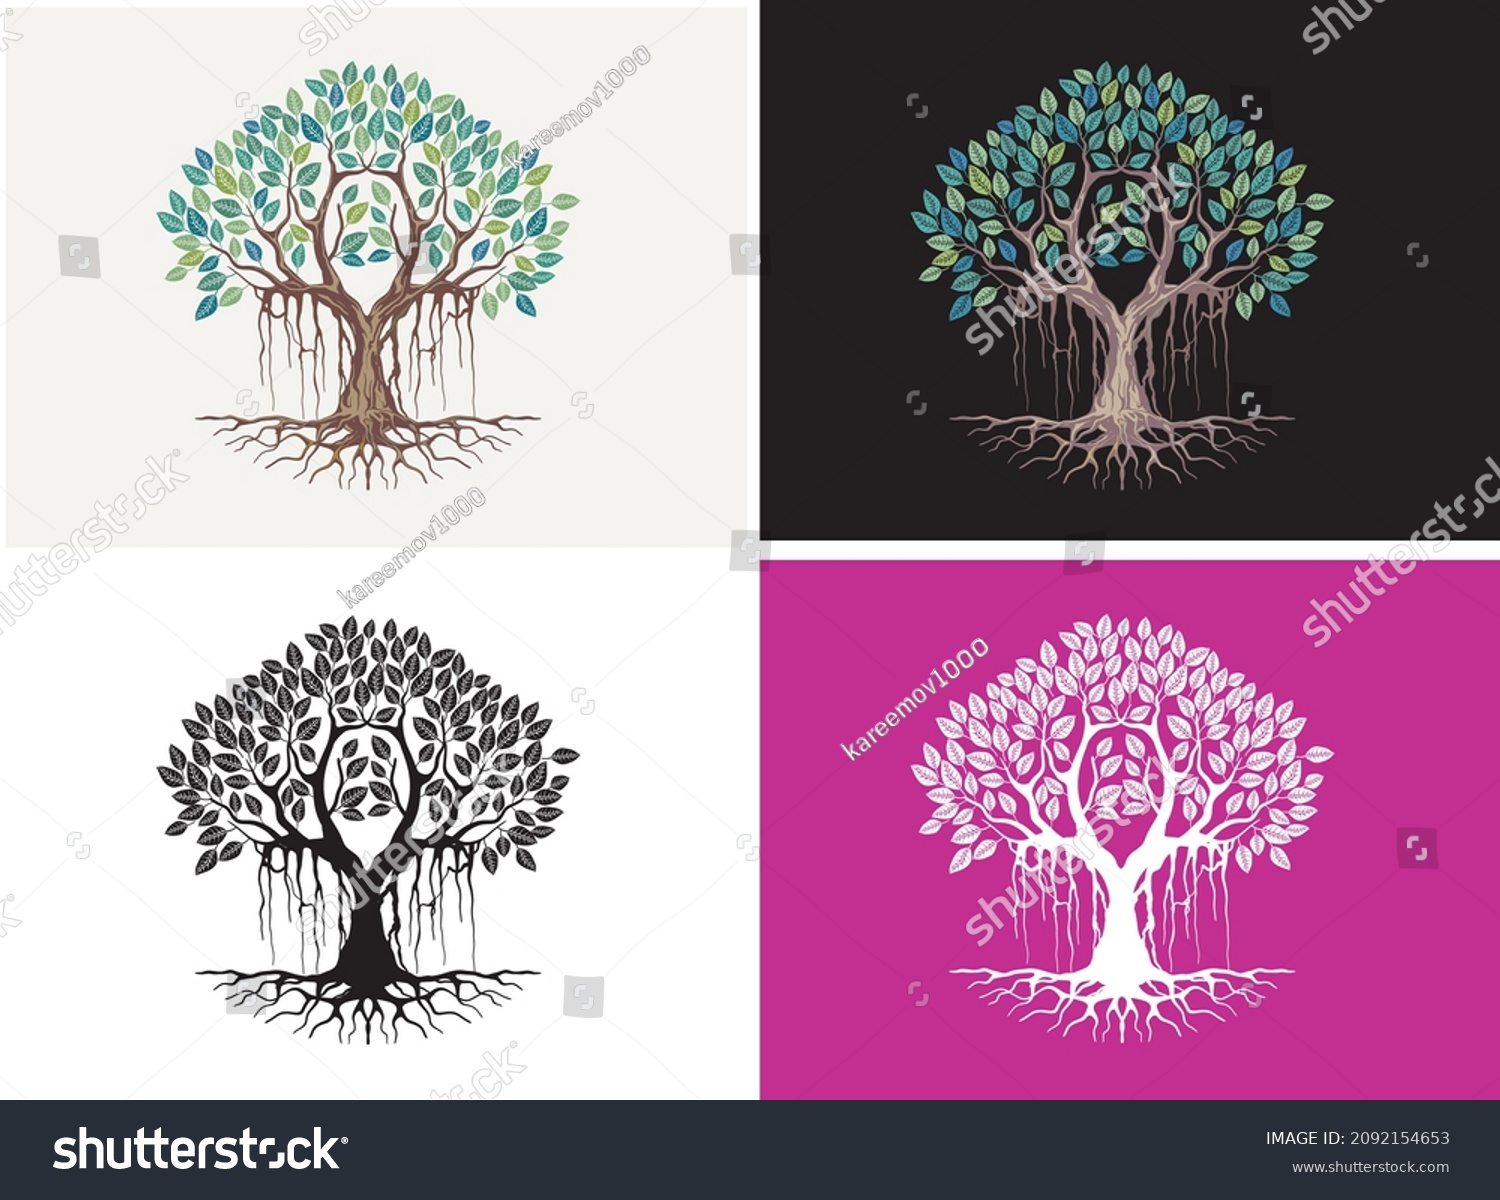 SVG of banyan tree illustrations in four color variants svg